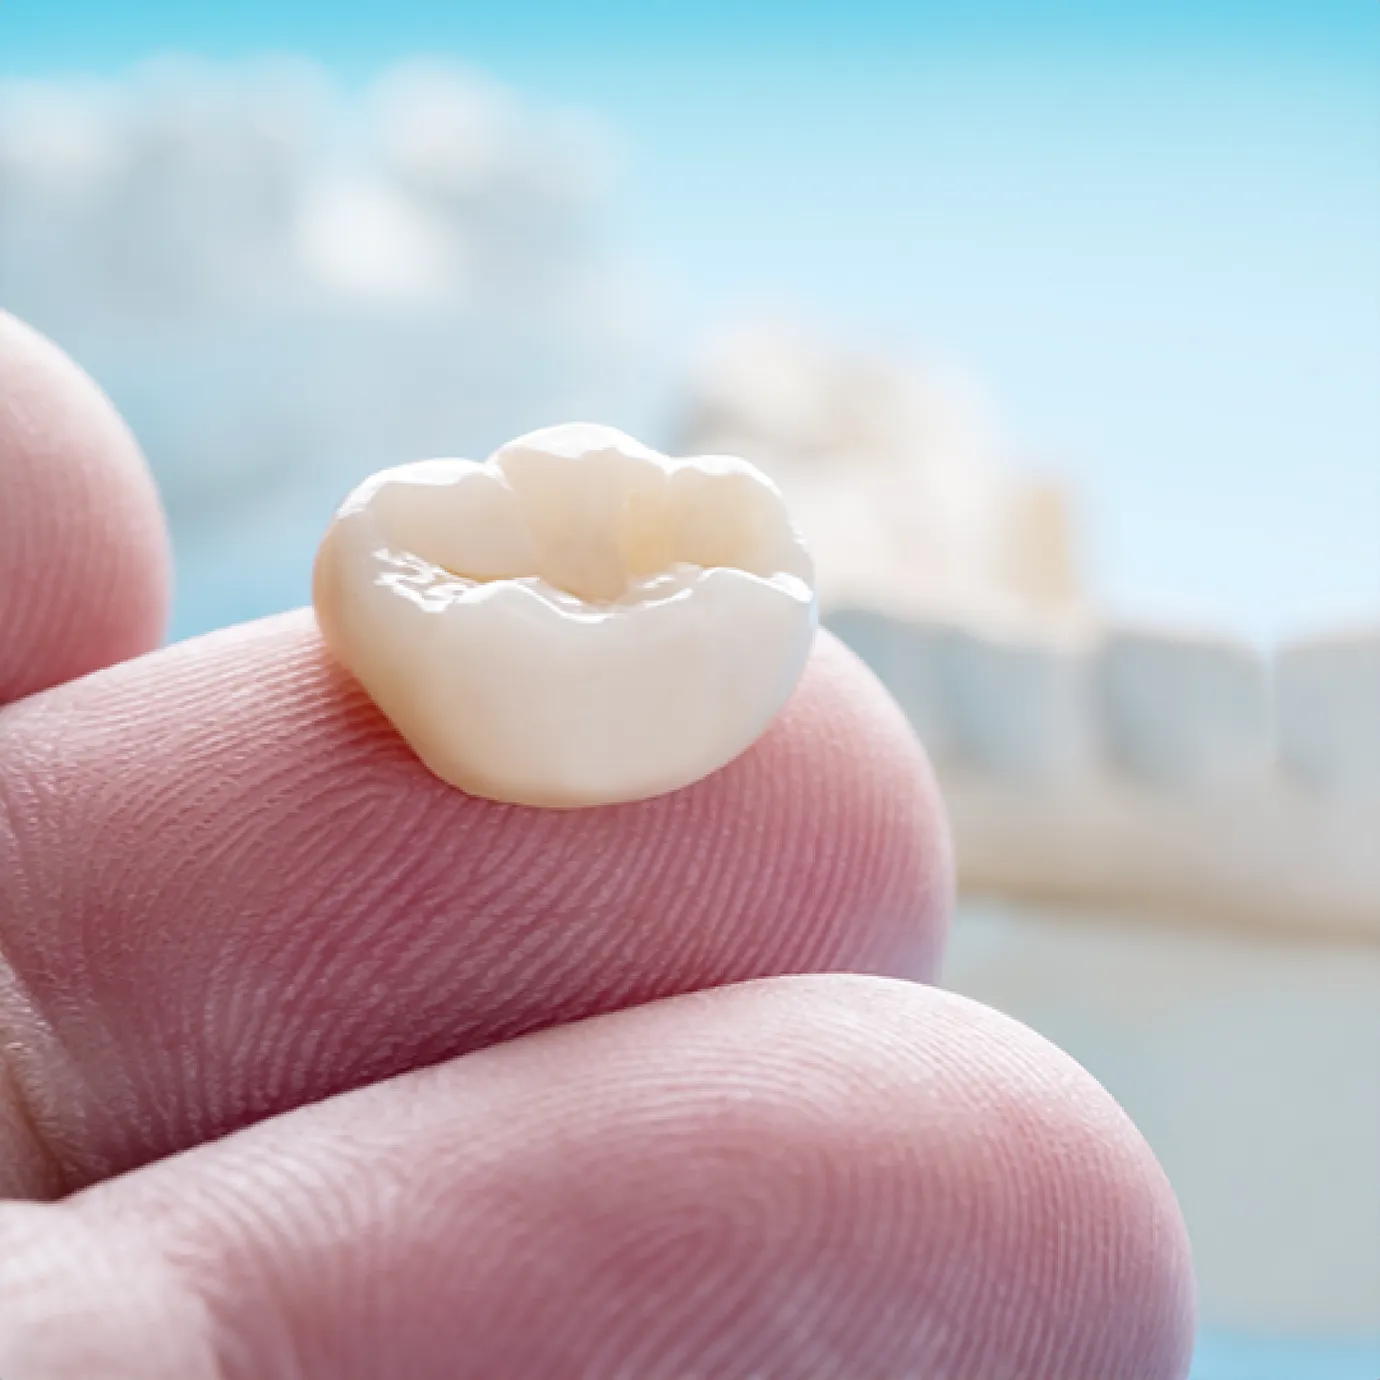 How are broken teeth treated?